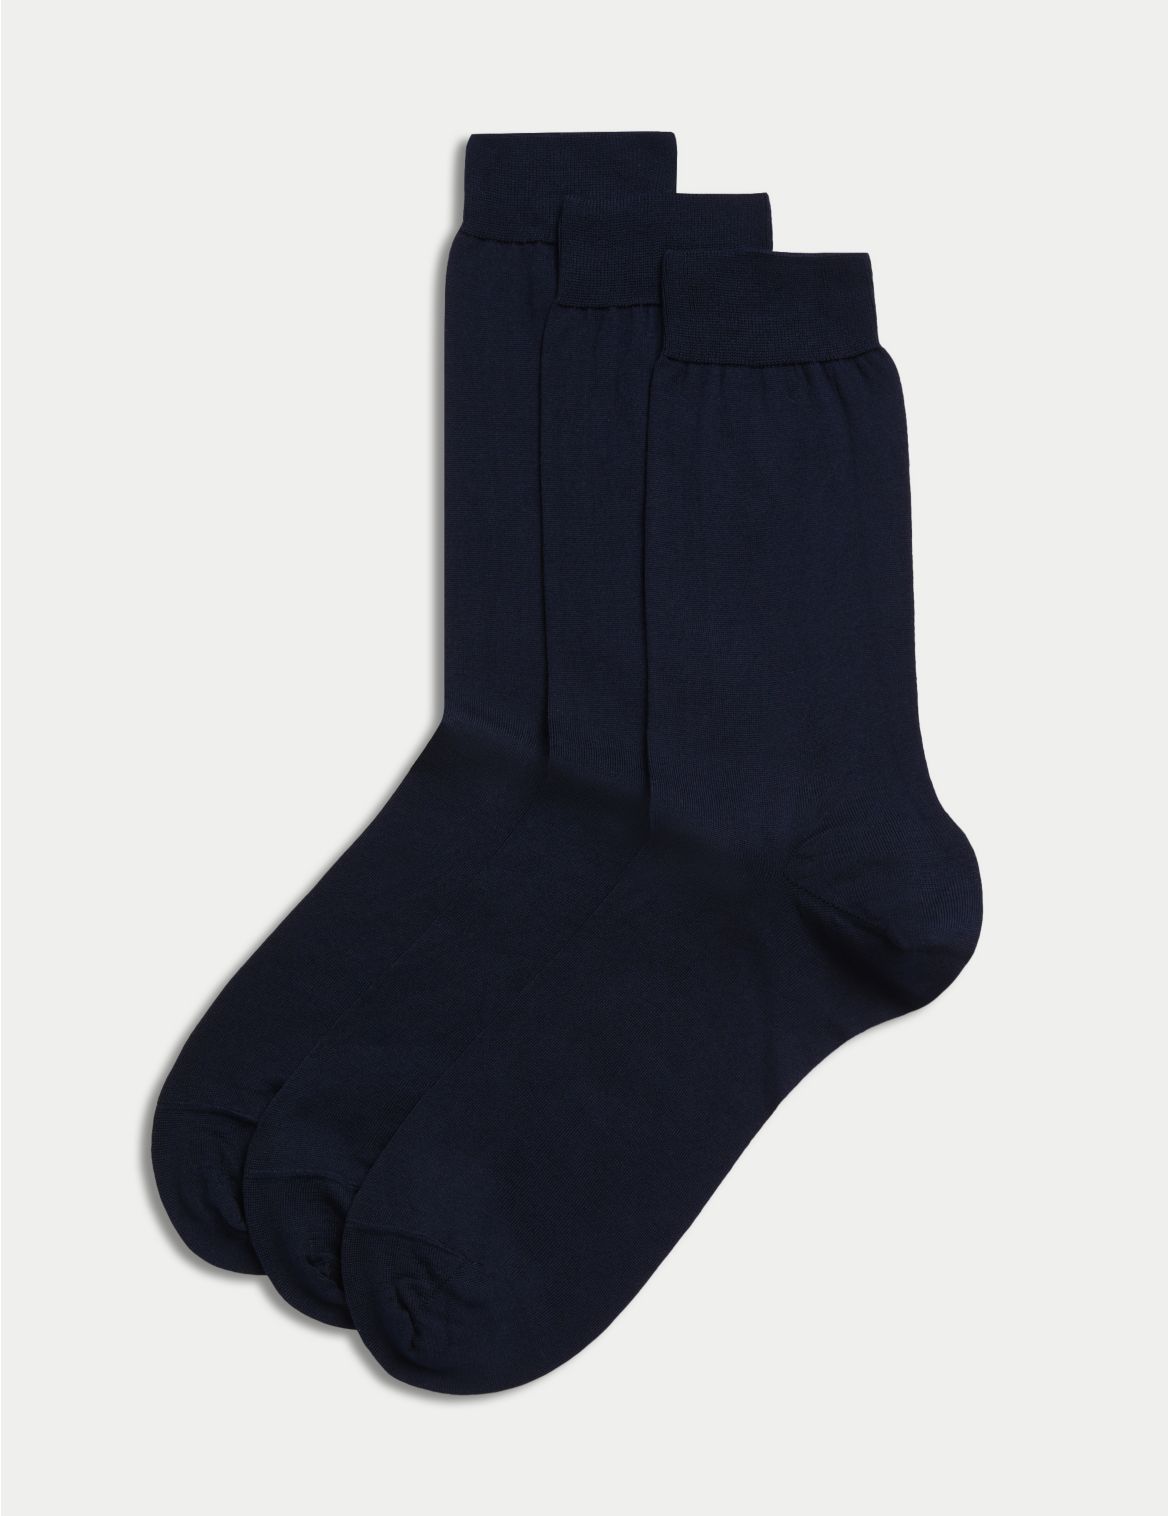 3 Pack Luxury Cotton Socks navy